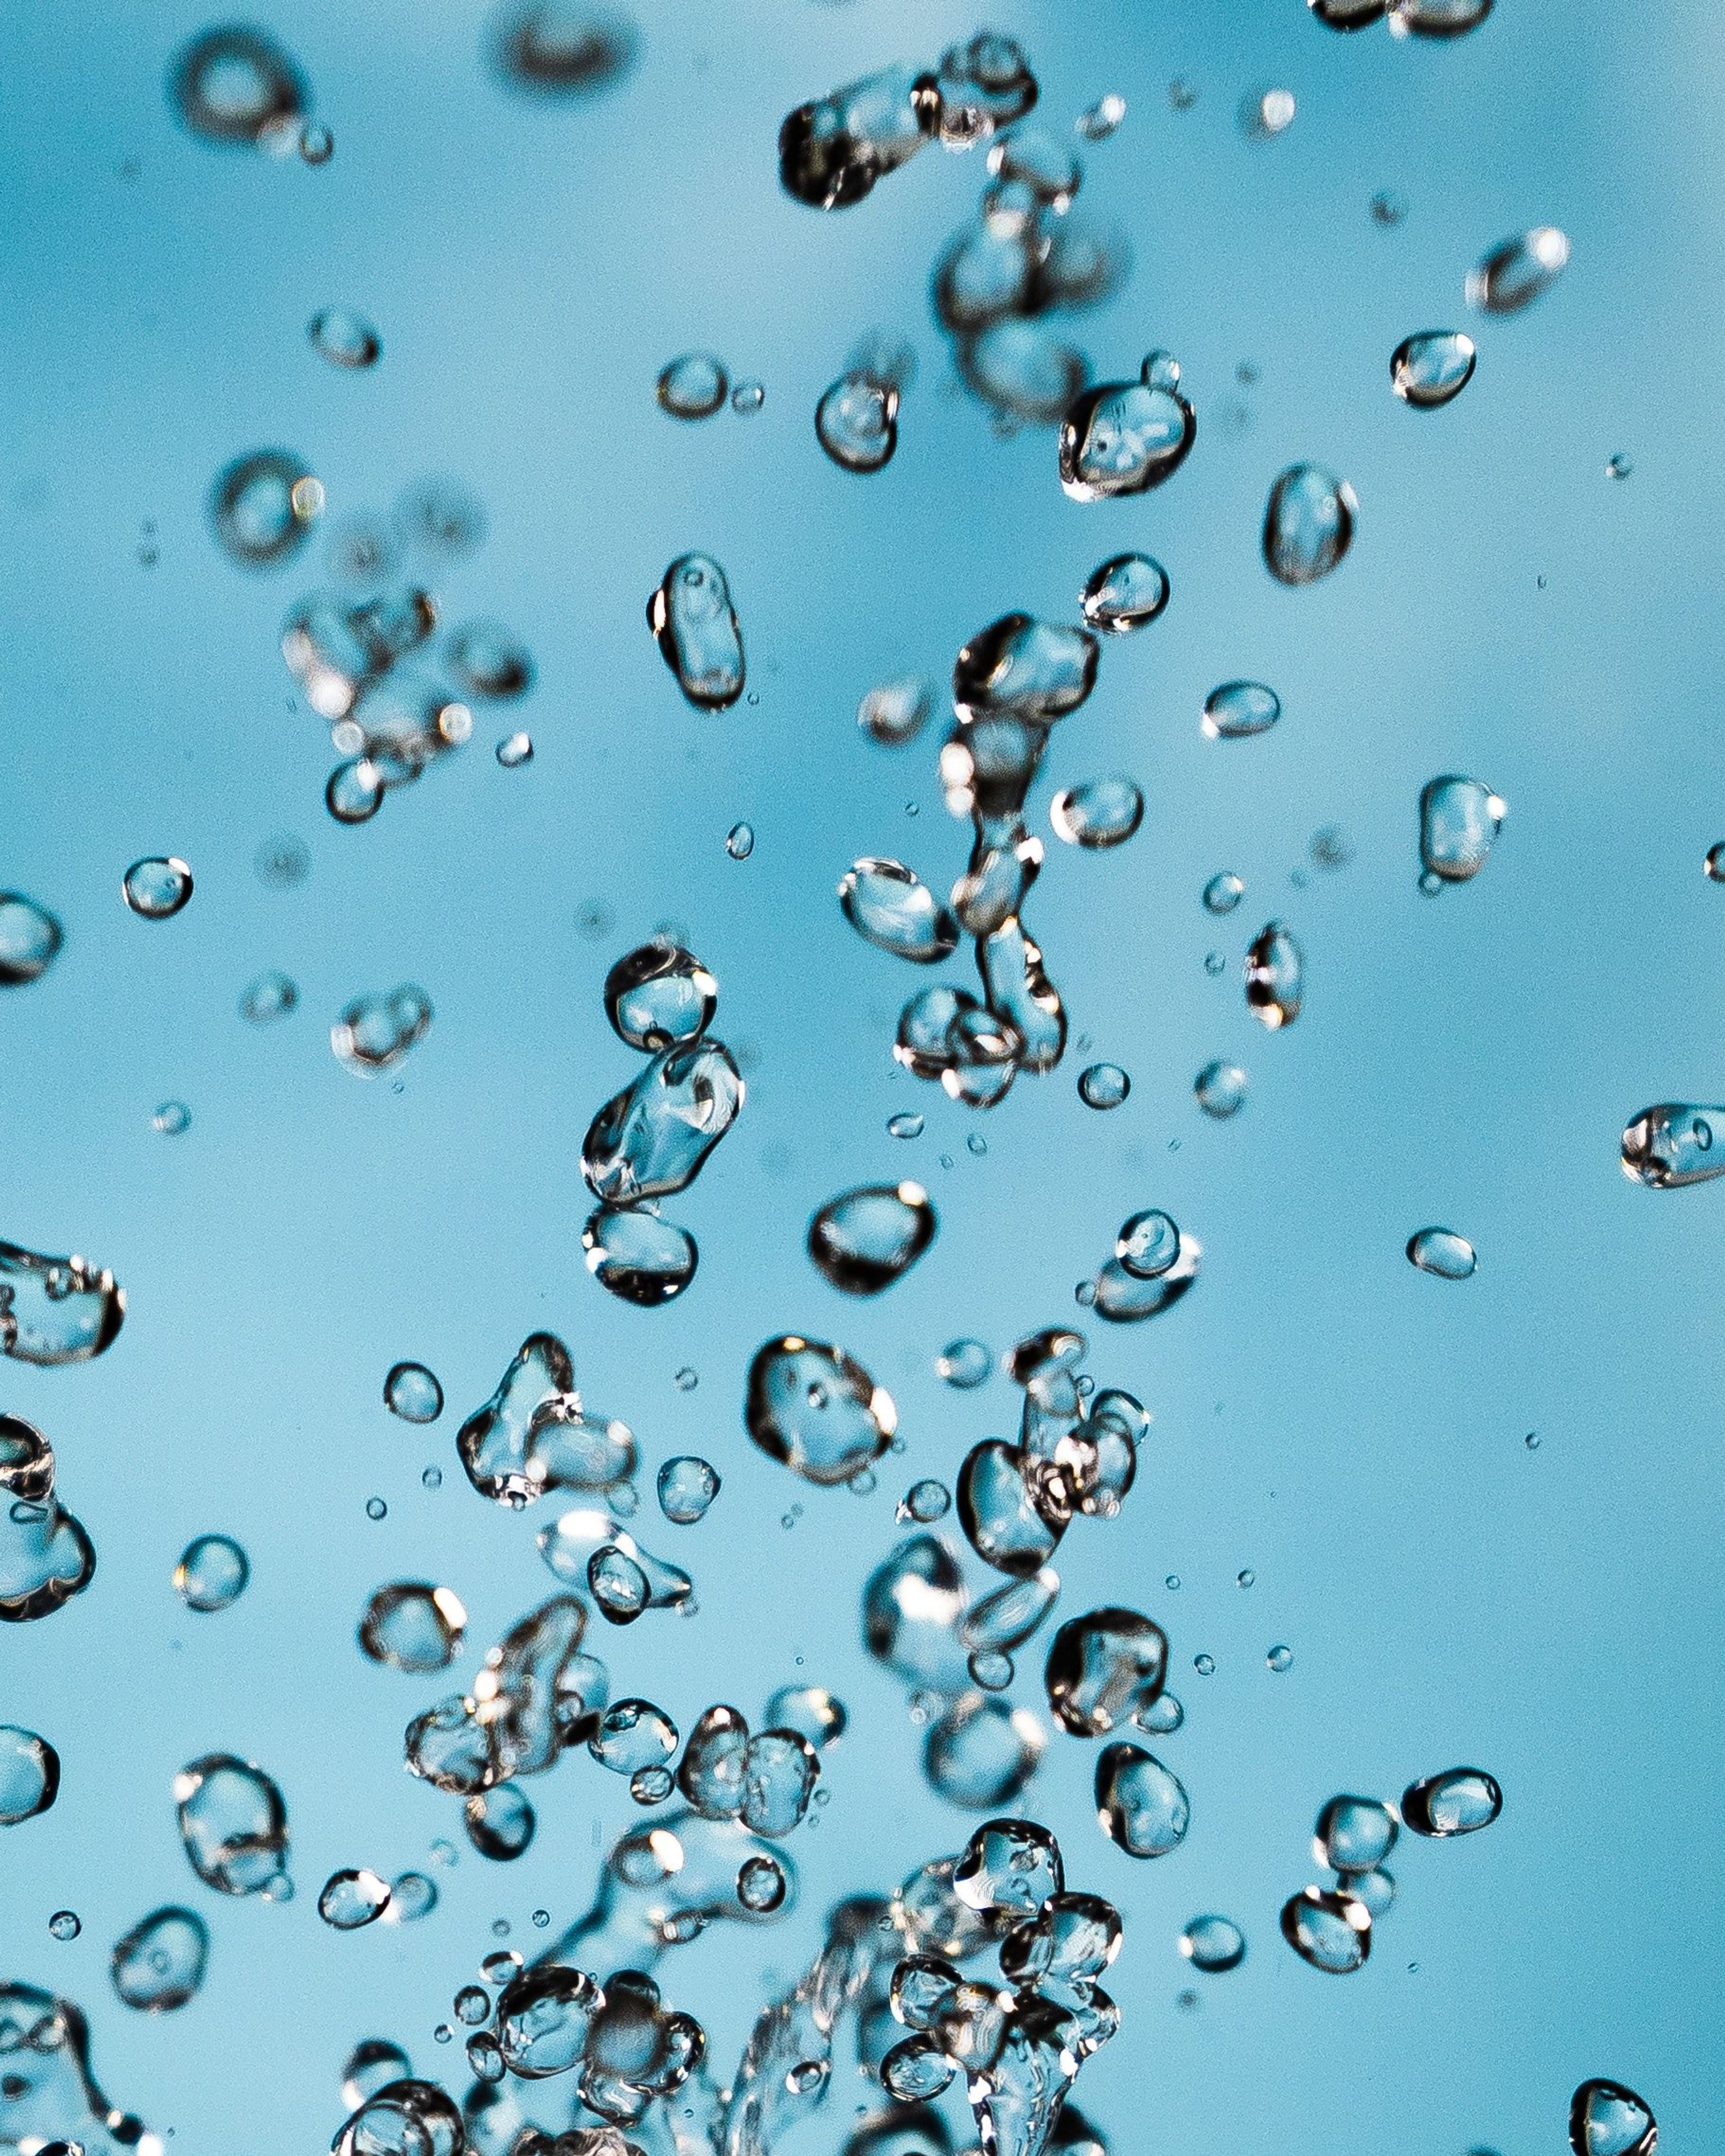 Underwater bubbles